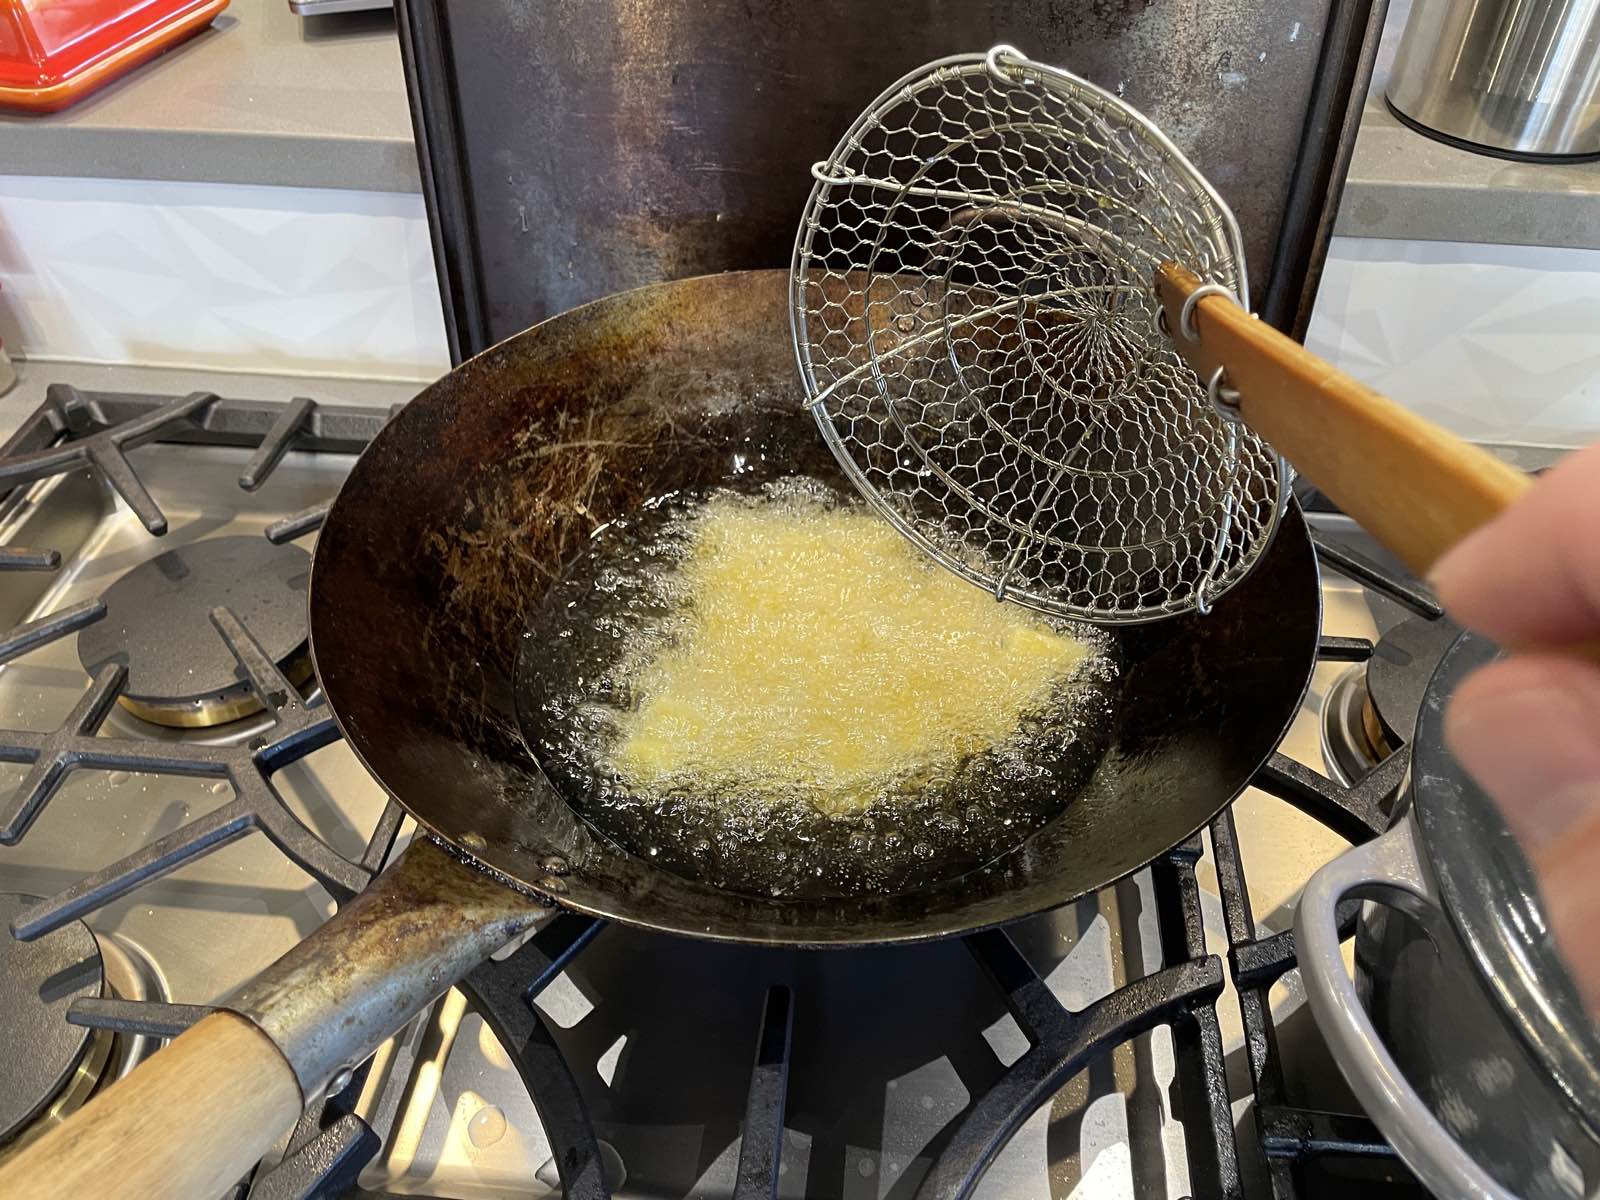 garlic frying in a wok